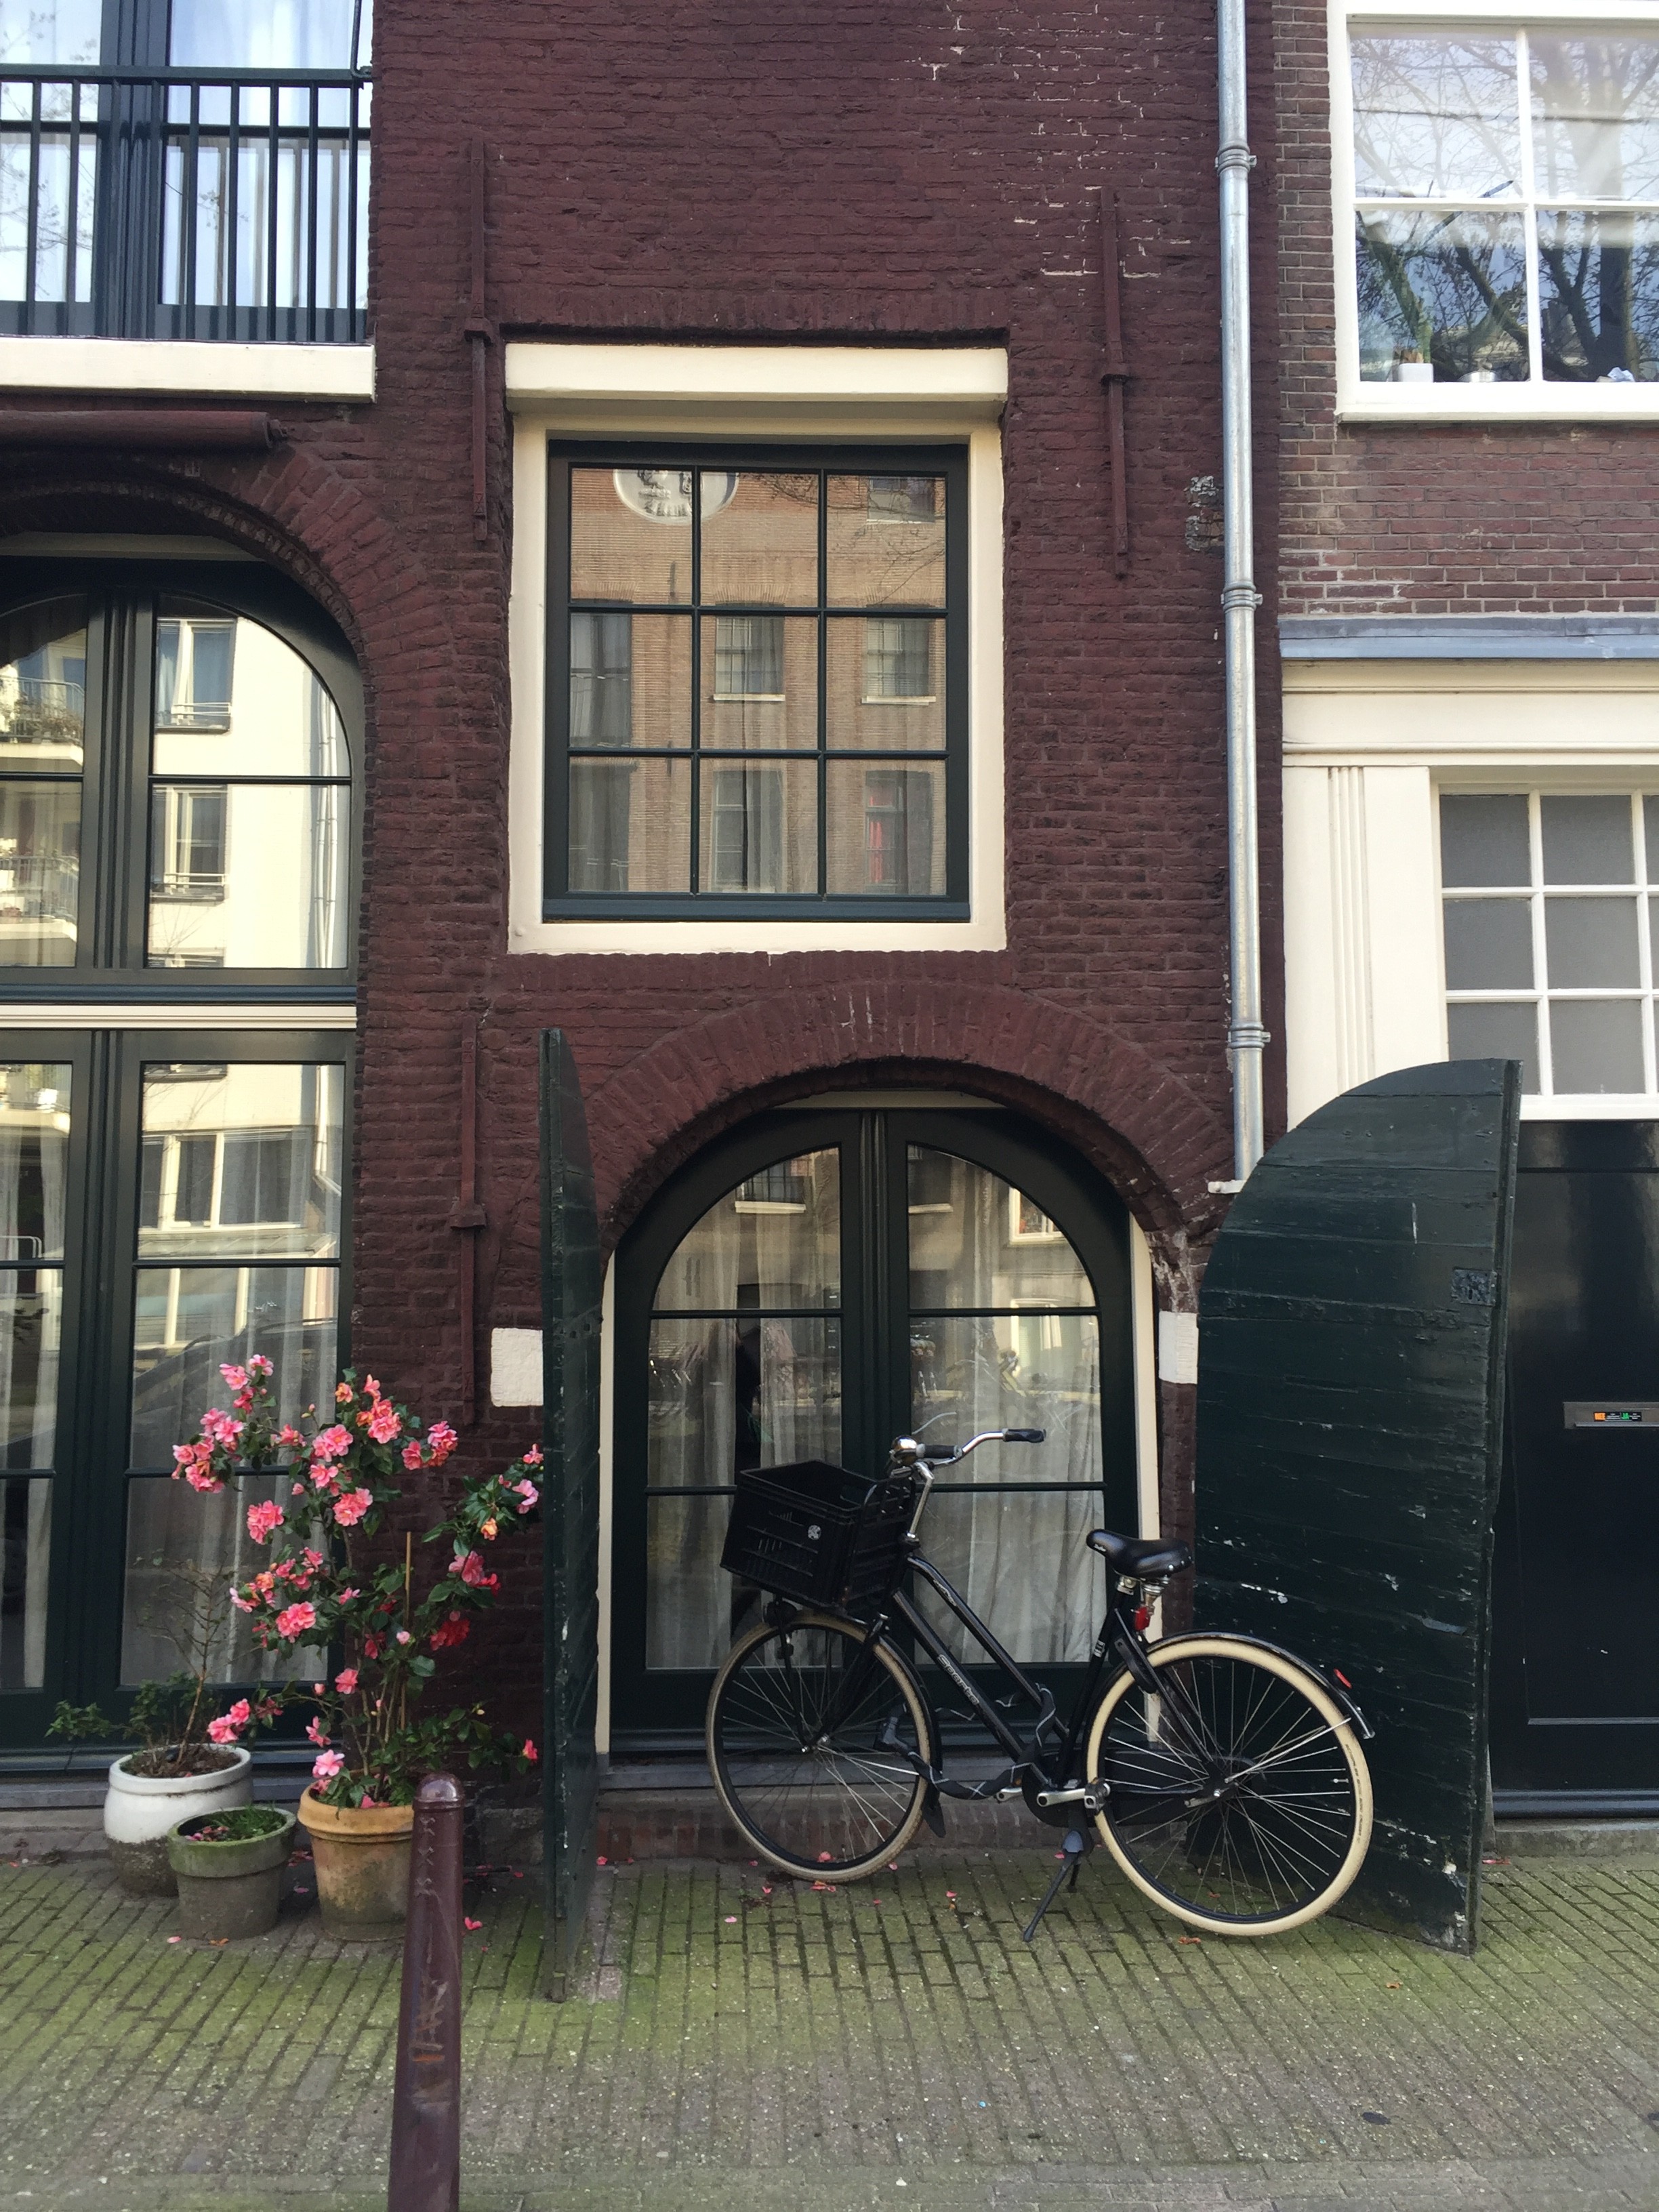 #ostockdamhagen16 Part 4: Our Final Days in Amsterdam